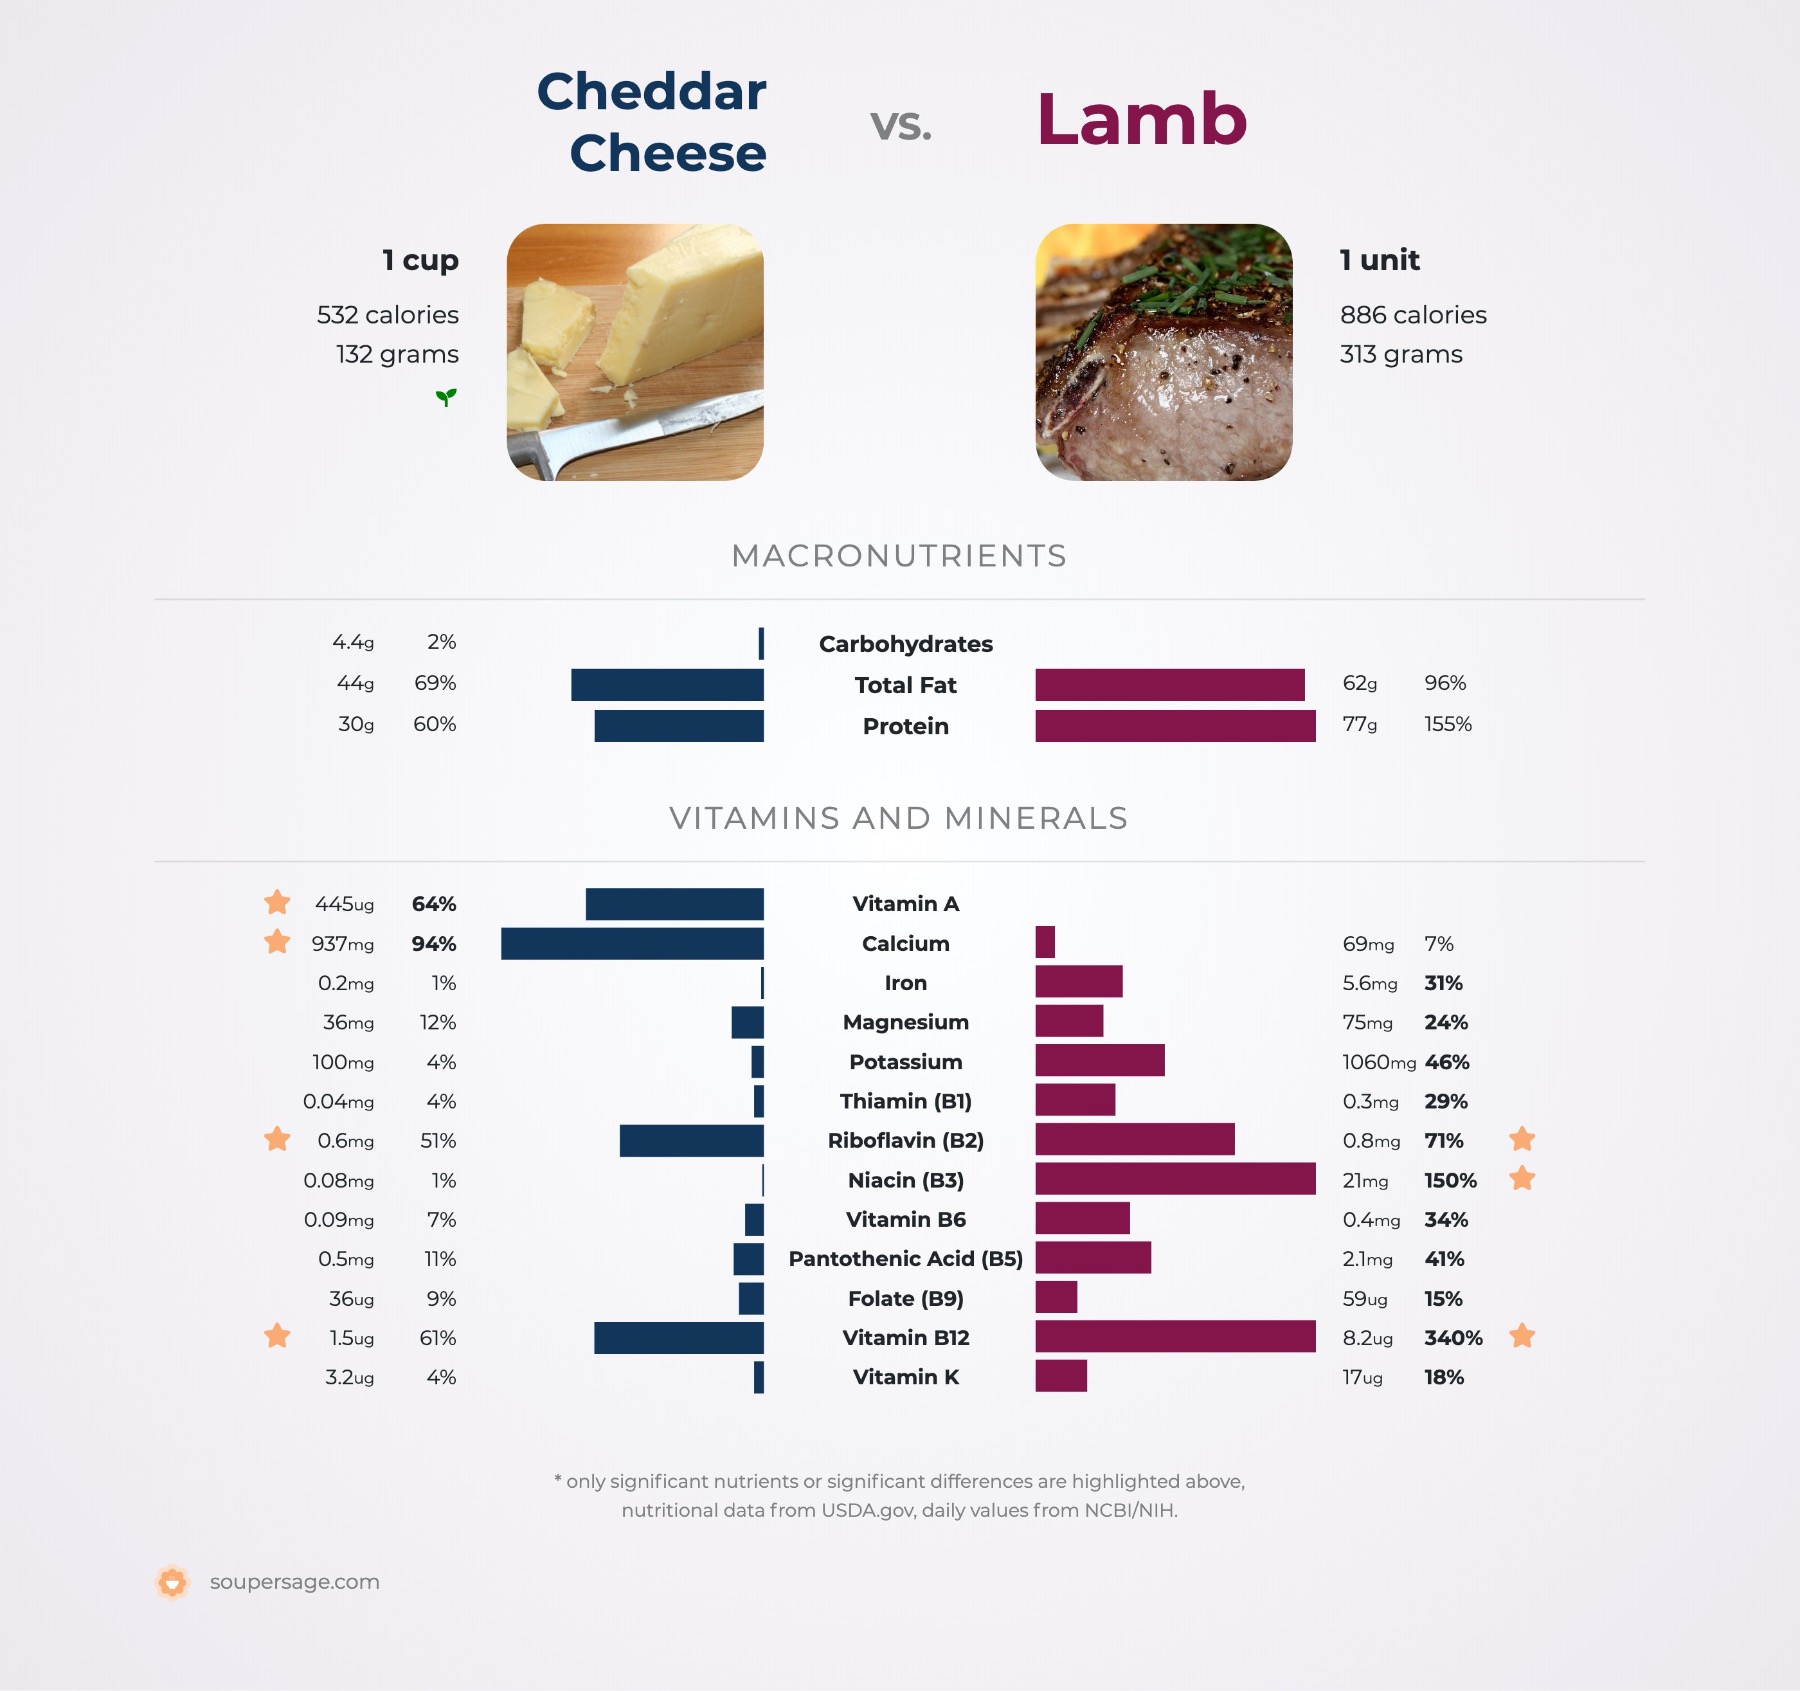 nutrition comparison of cheddar cheese vs. lamb